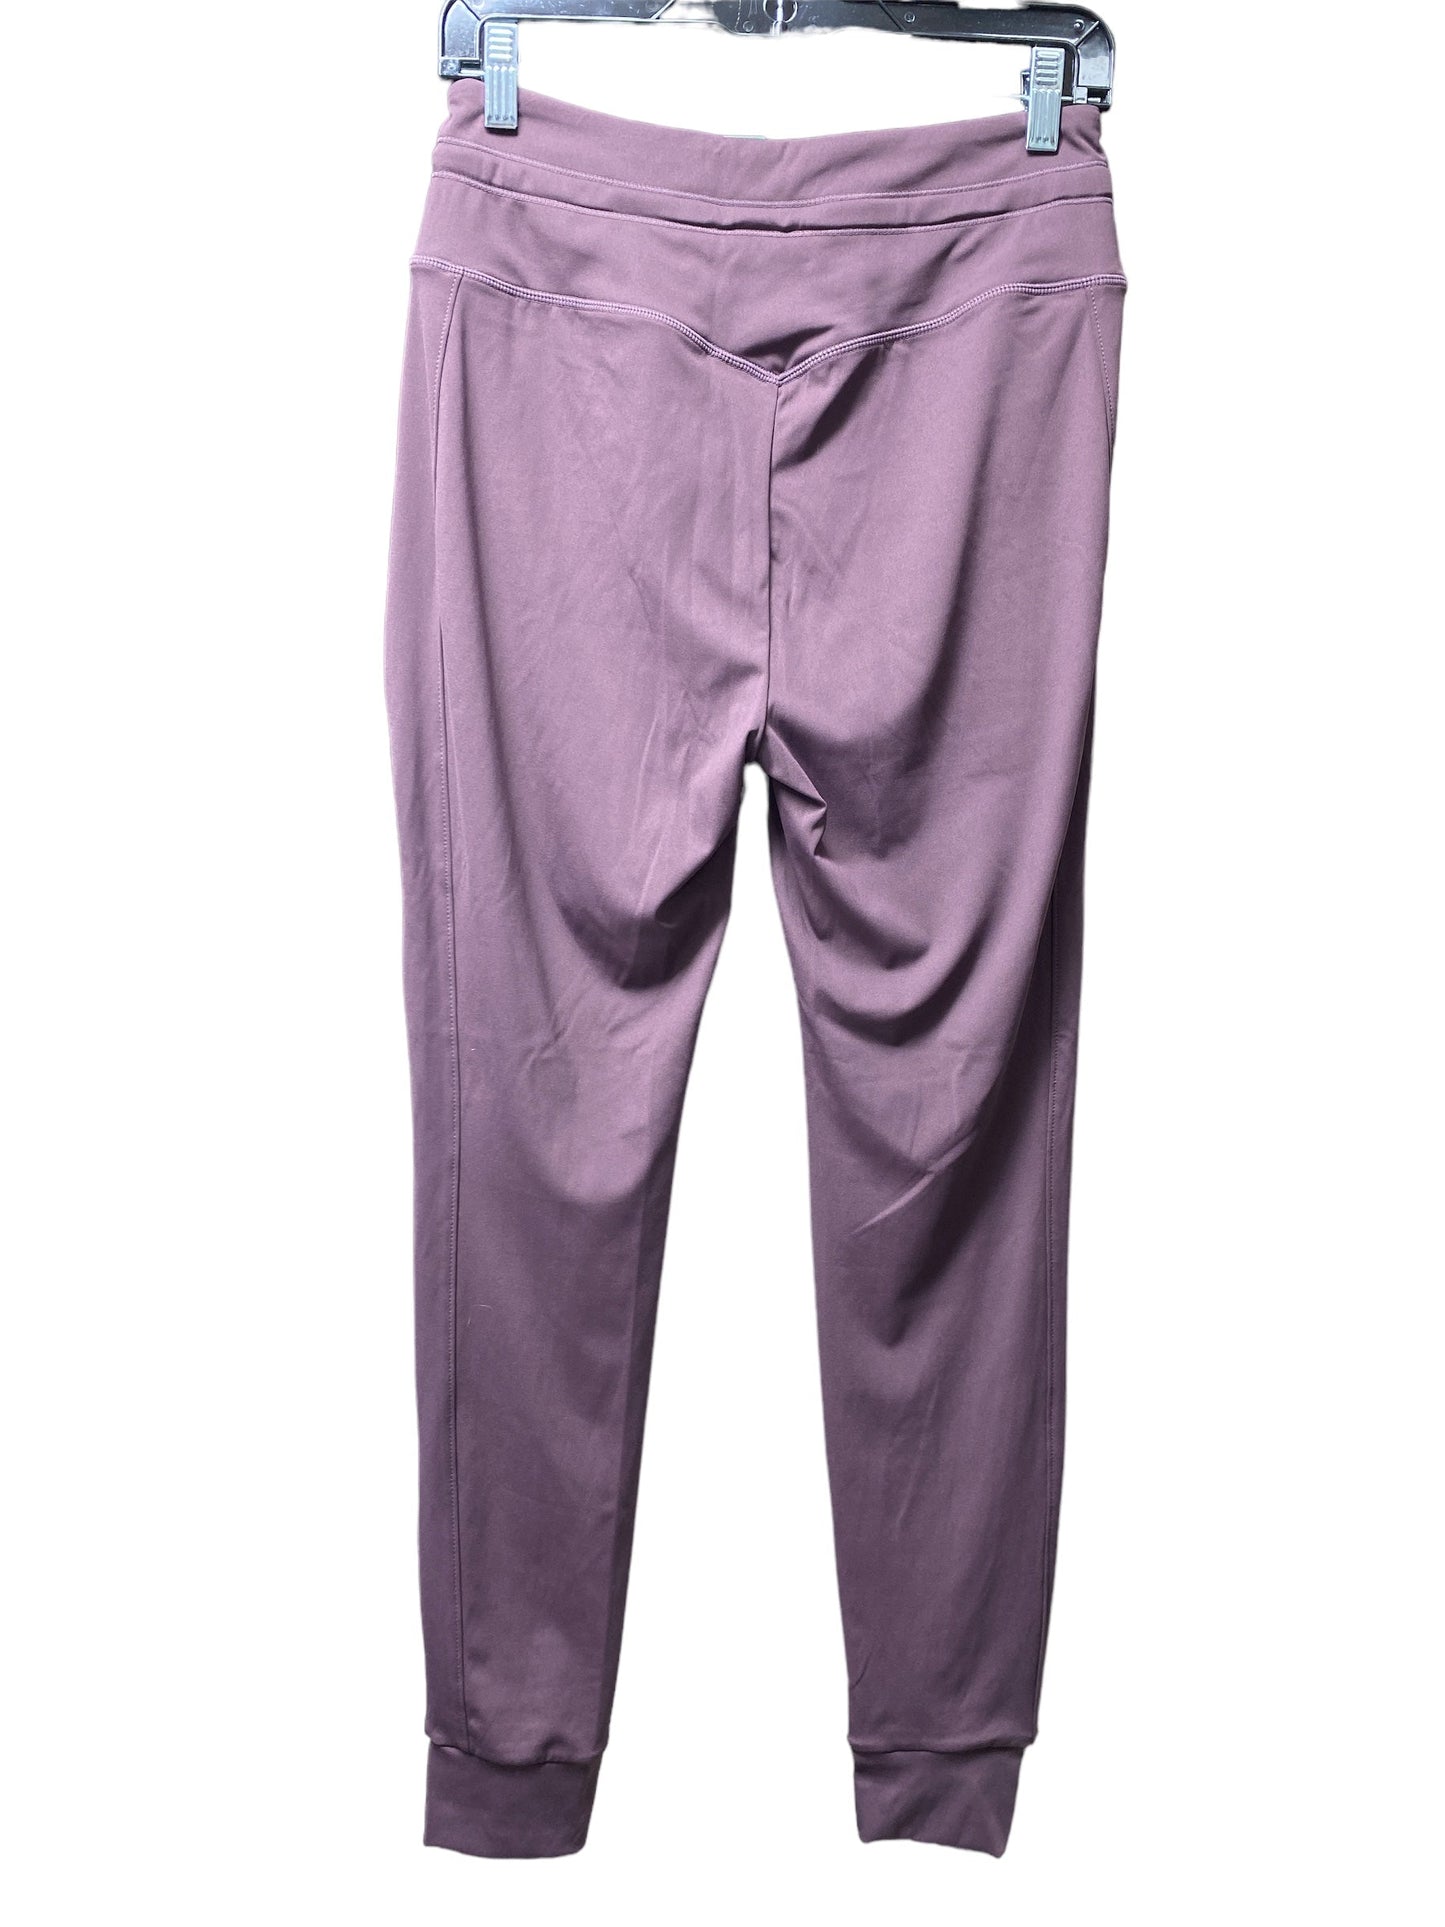 Mauve Athletic Pants by Halara , Size M